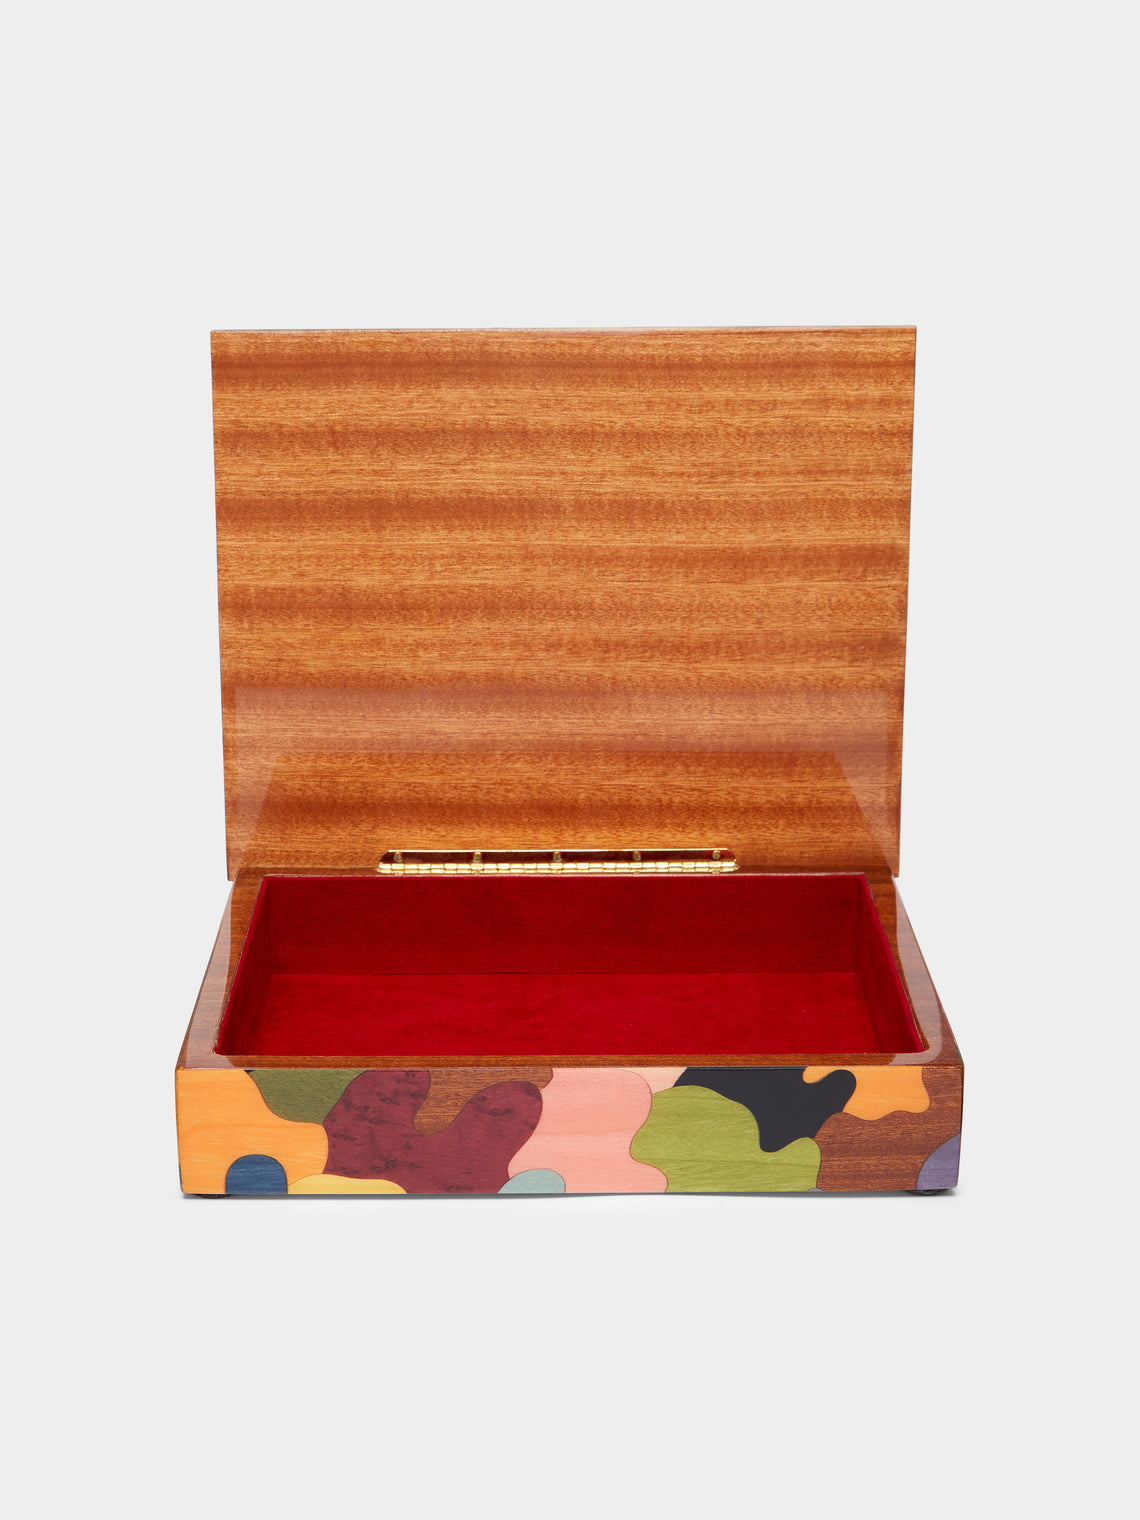 Biagio Barile - Puzzle Wood Inlay Box -  - ABASK